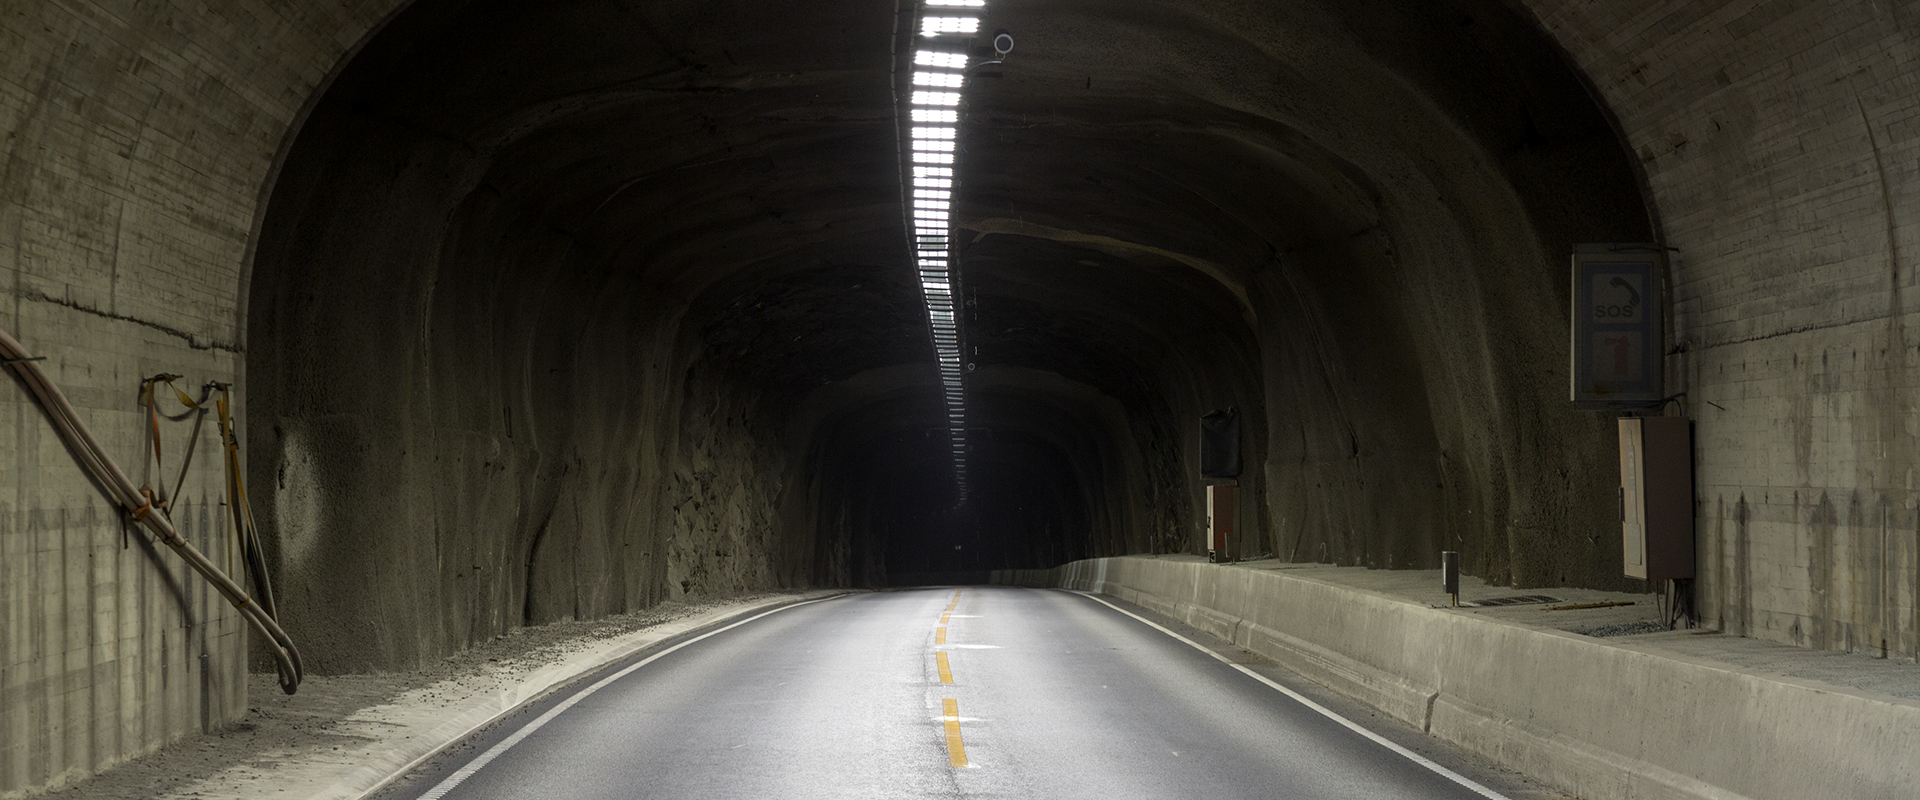 LED tunnel lighting floodlights